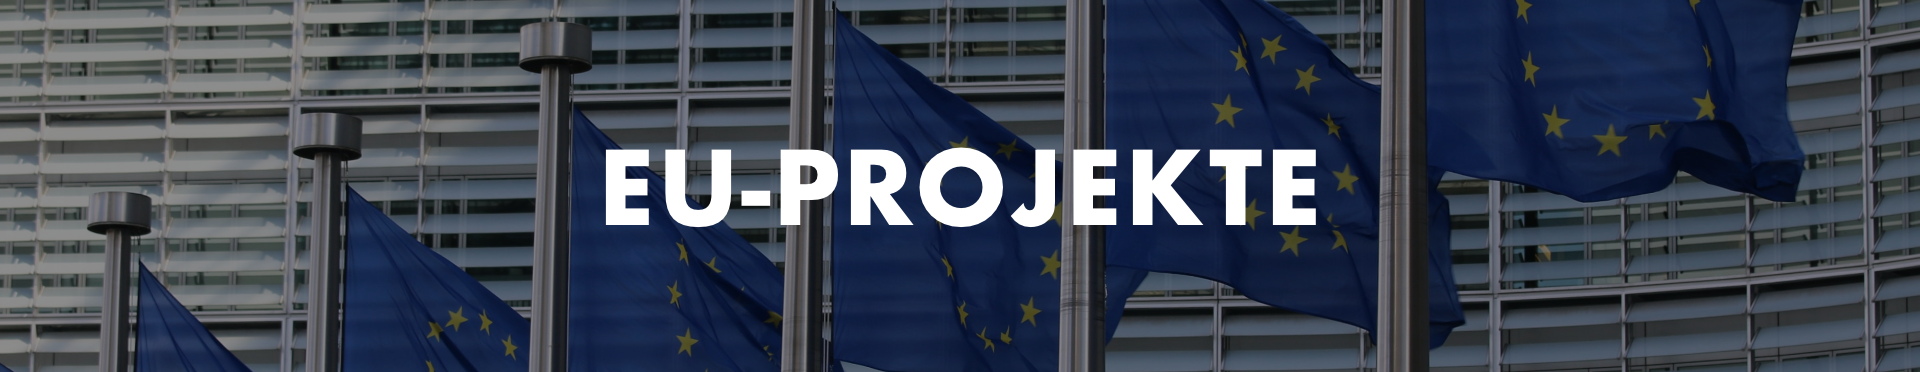 eu_projects